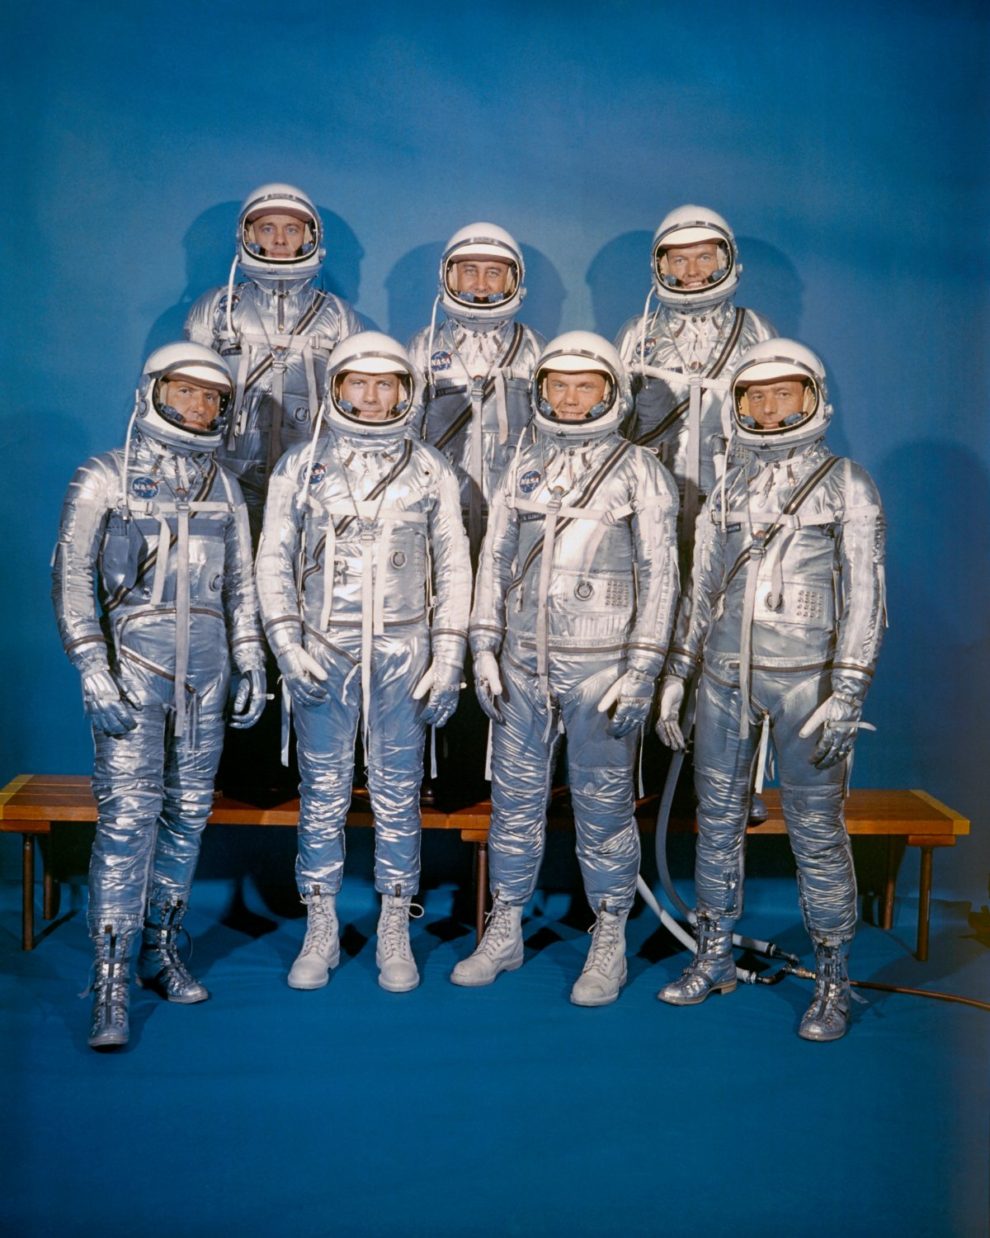 Fila frontal, de izquierda a derecha: Walter M. Schirra, Jr., Donald K. "Deke" Slayton, John H. Glenn, Jr., y M. Scott Carpenter. Fila superior:, Alan B. Shepard, Jr., Virgil I. "Gus" Grissom, y L. Gordon Cooper, Jr. El primer grupo de astronautas de la NASA.